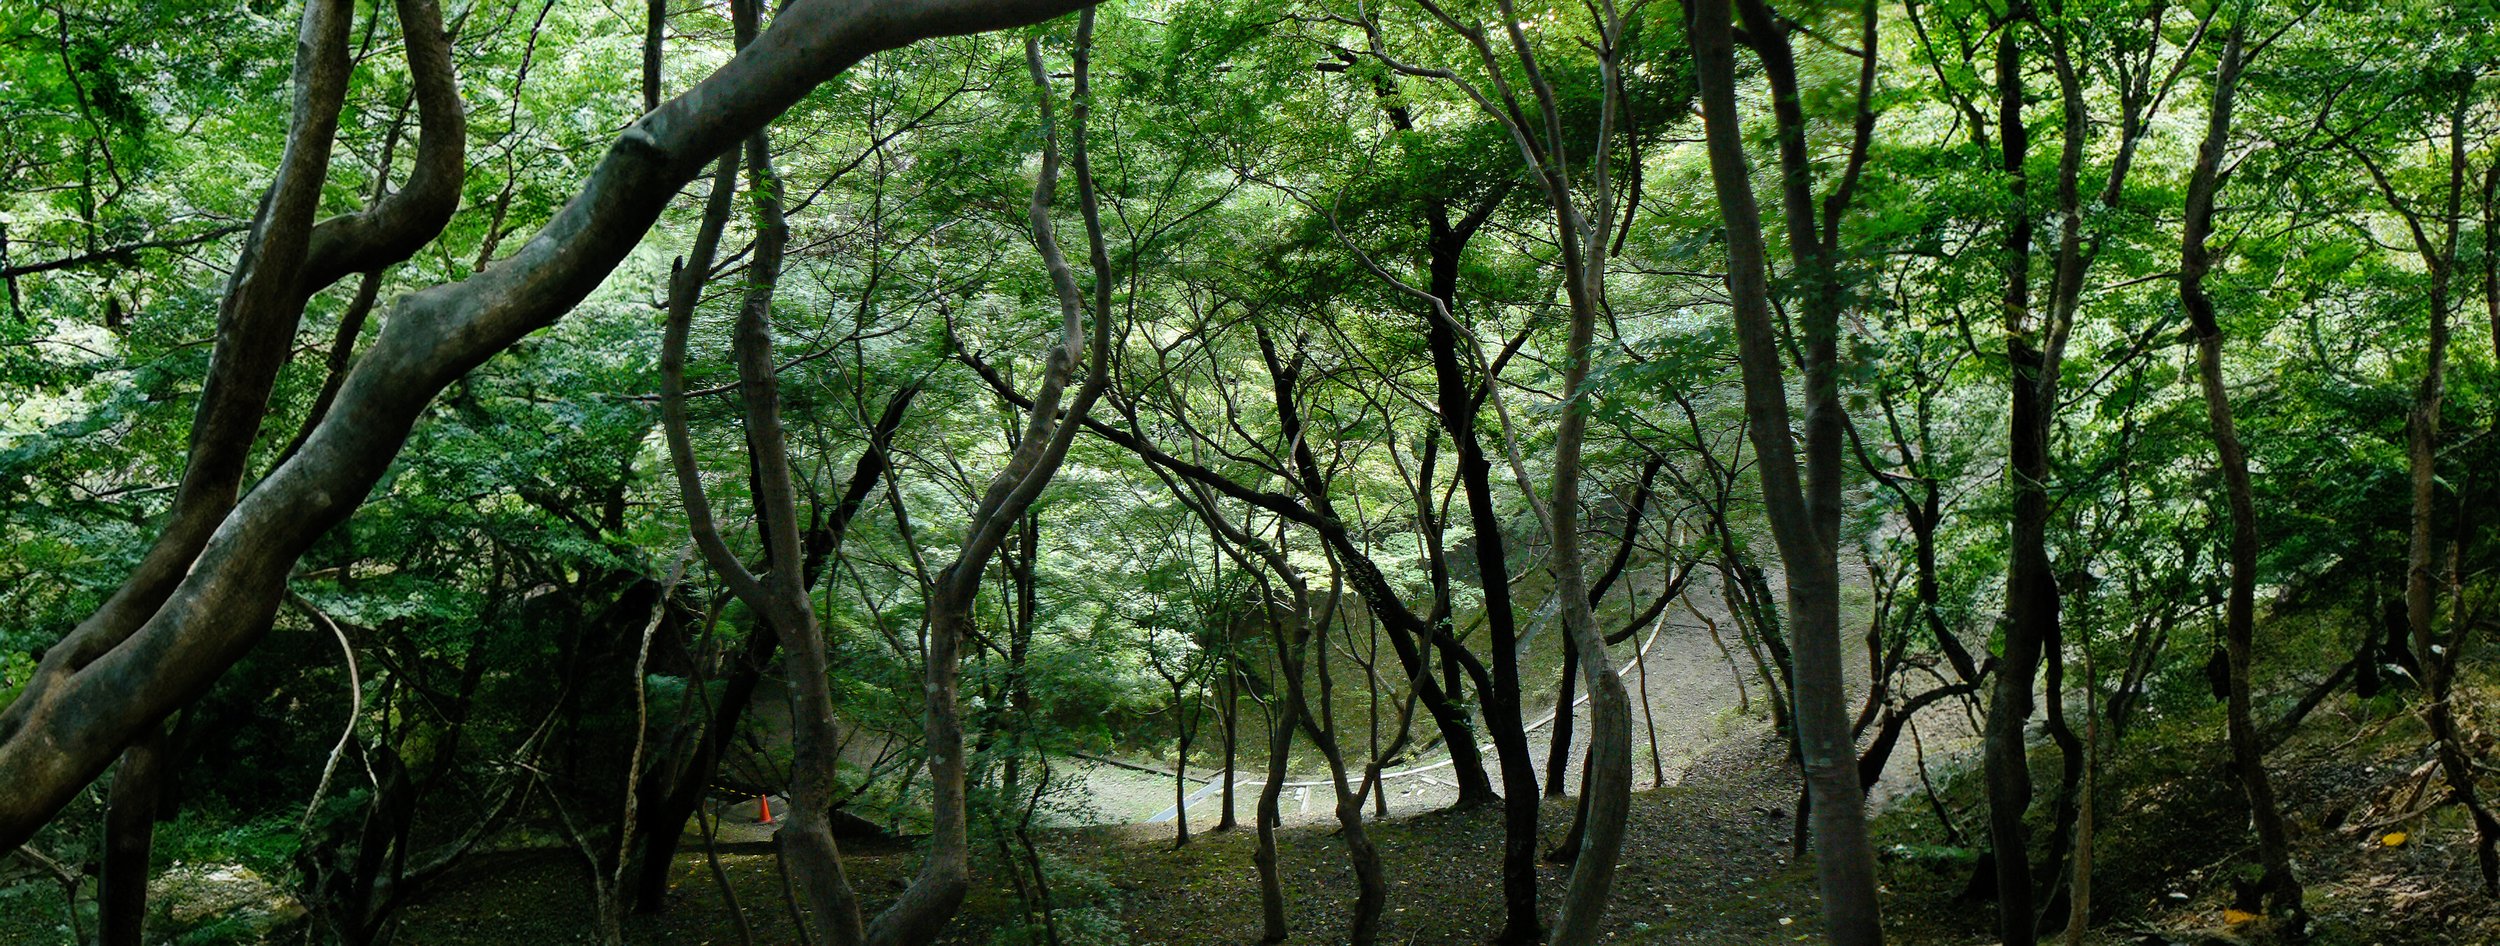 Mystical trees.jpg